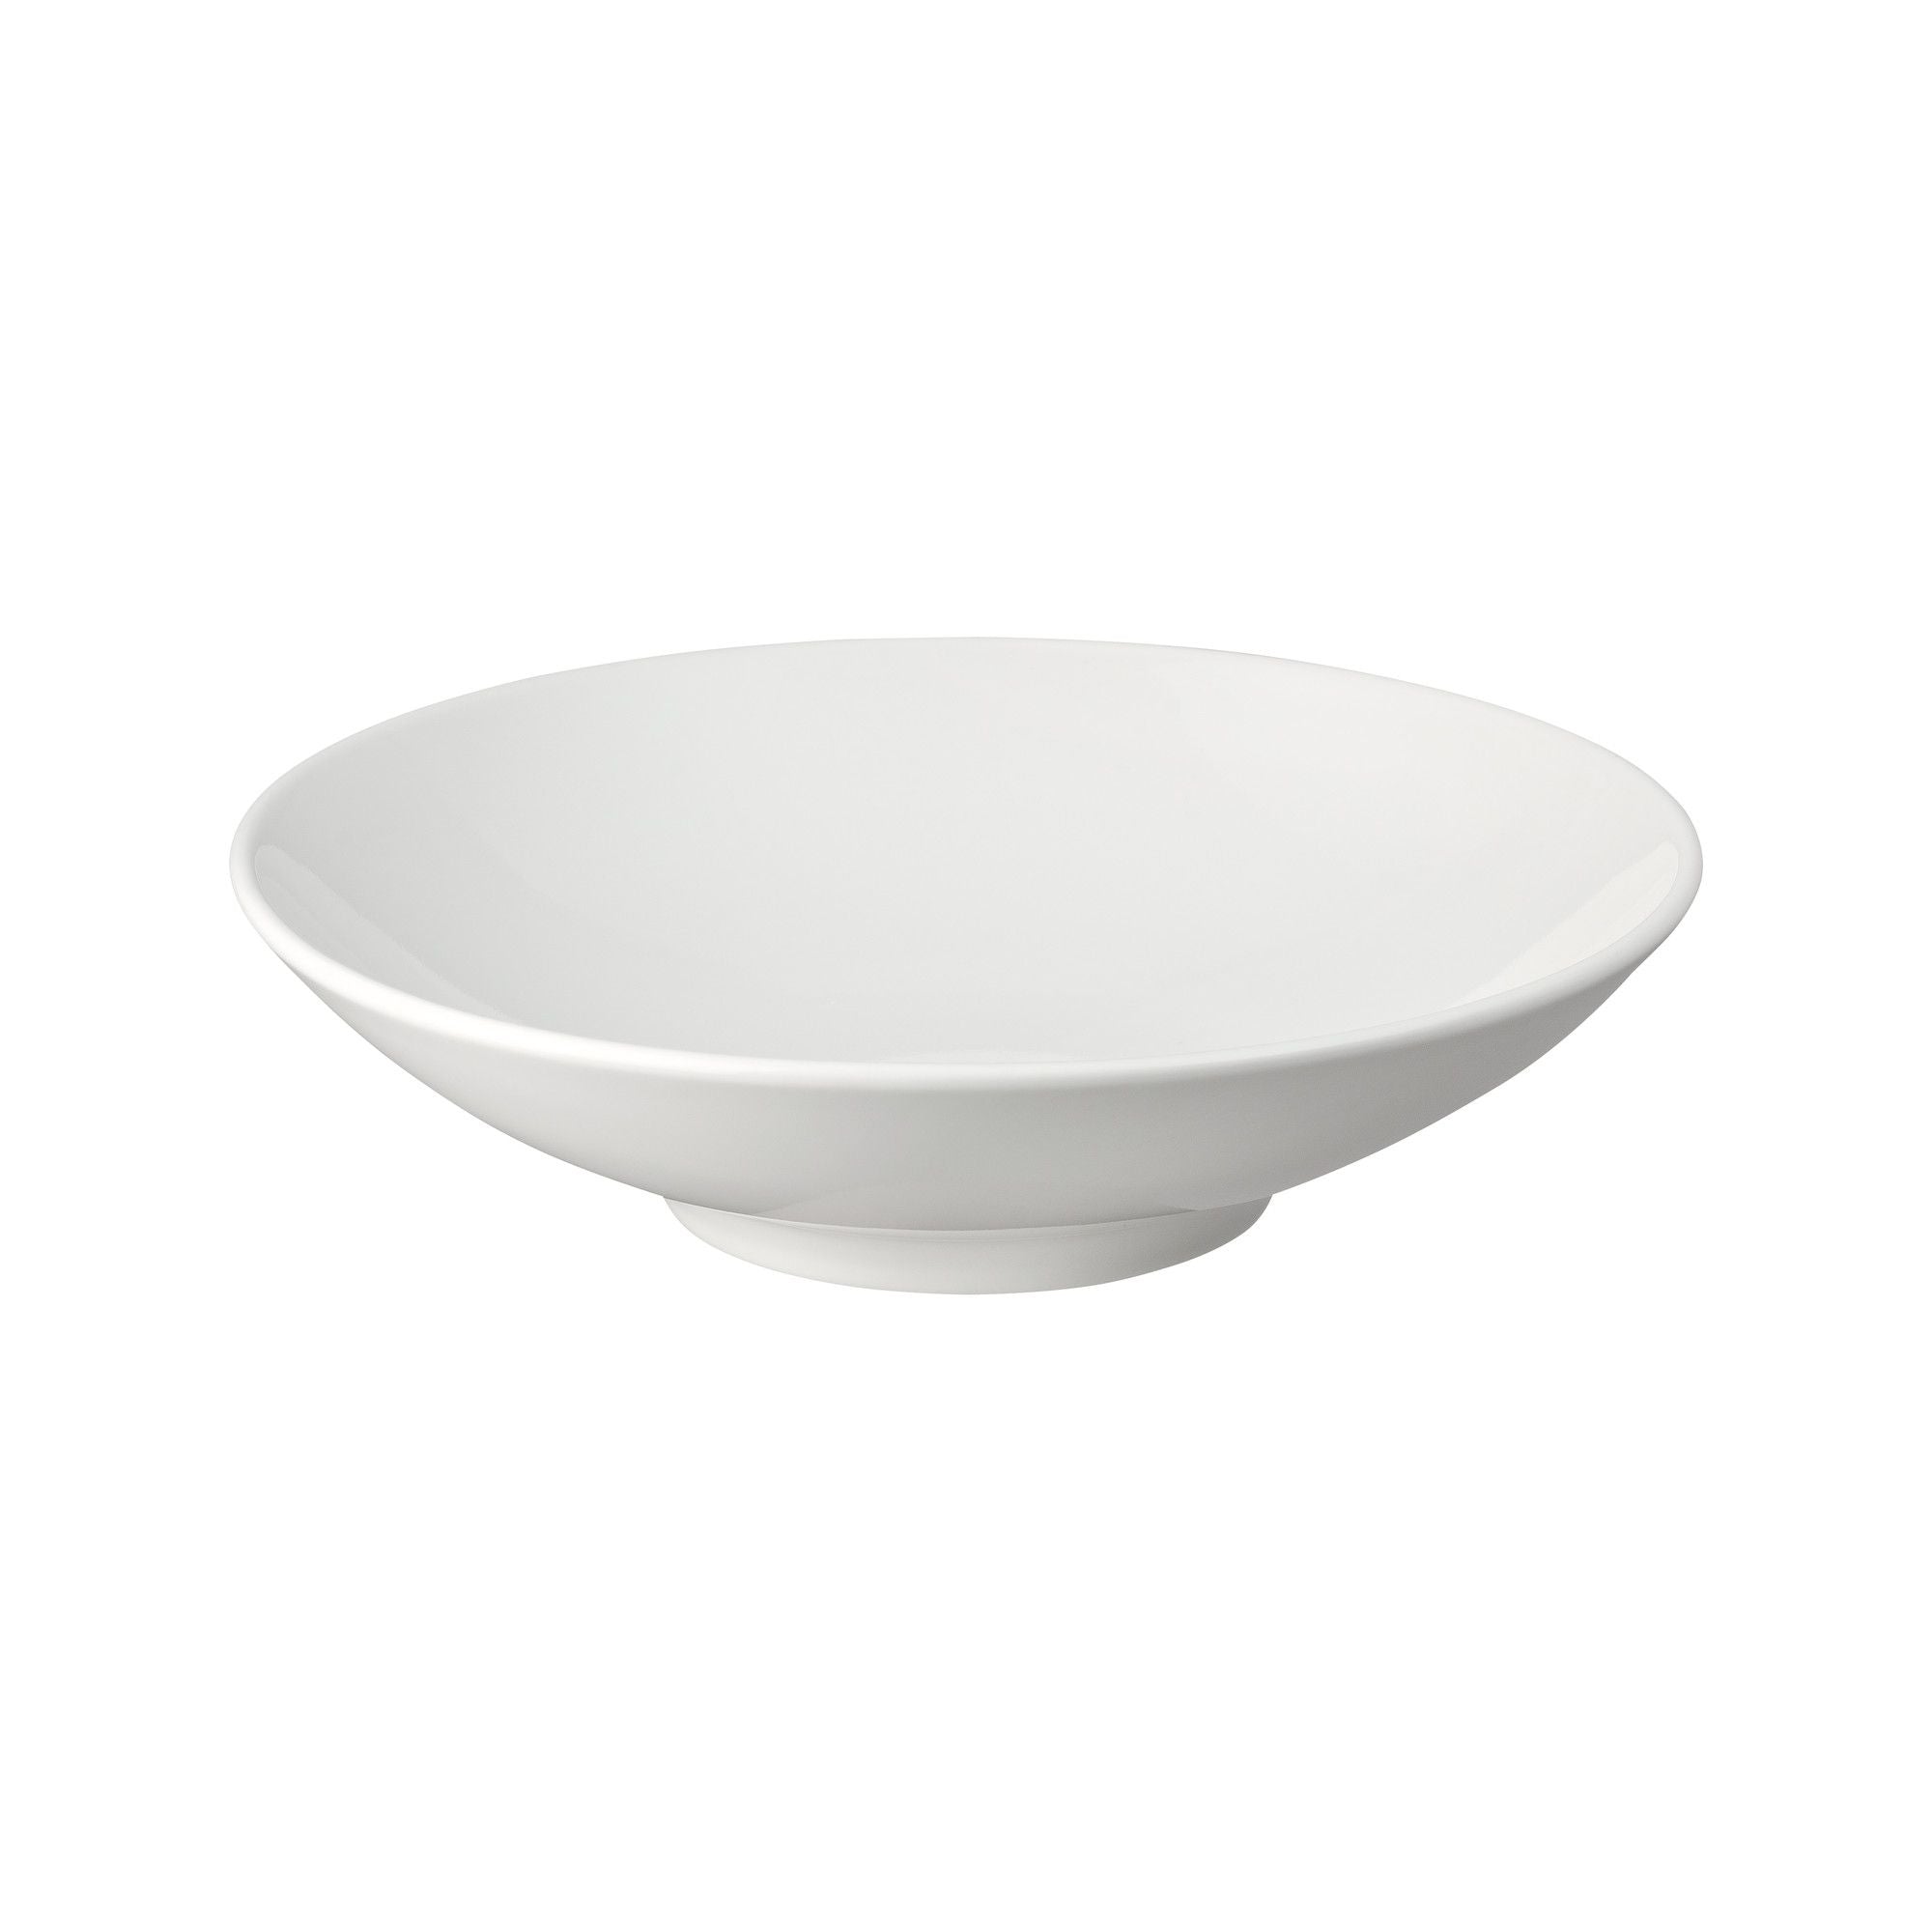 Denby Porcelain Arc White Pasta Bowl